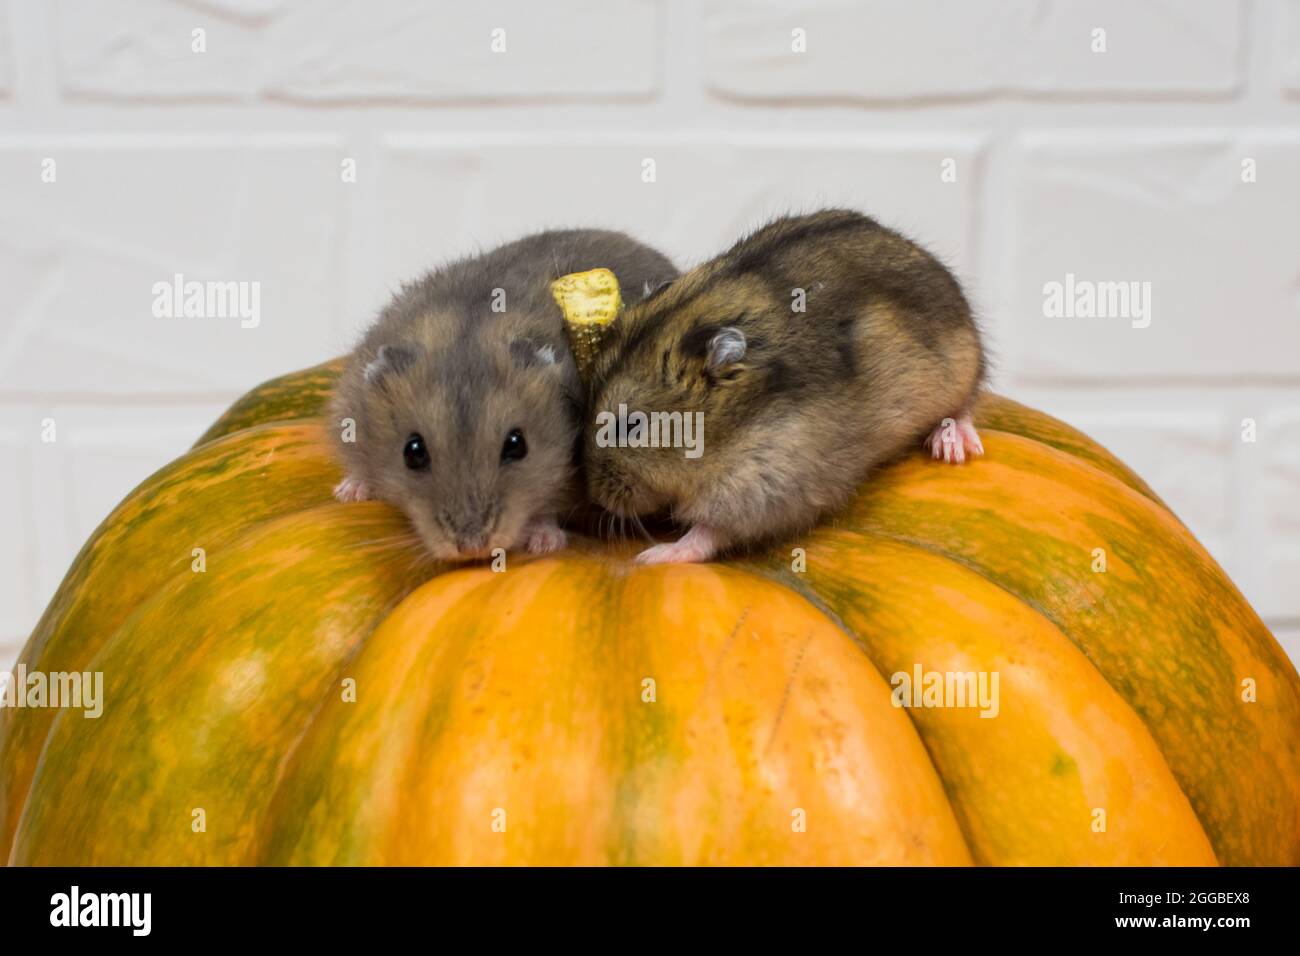 Two little Dzungarian hamsters sit on an orange pumpkin. Stock Photo